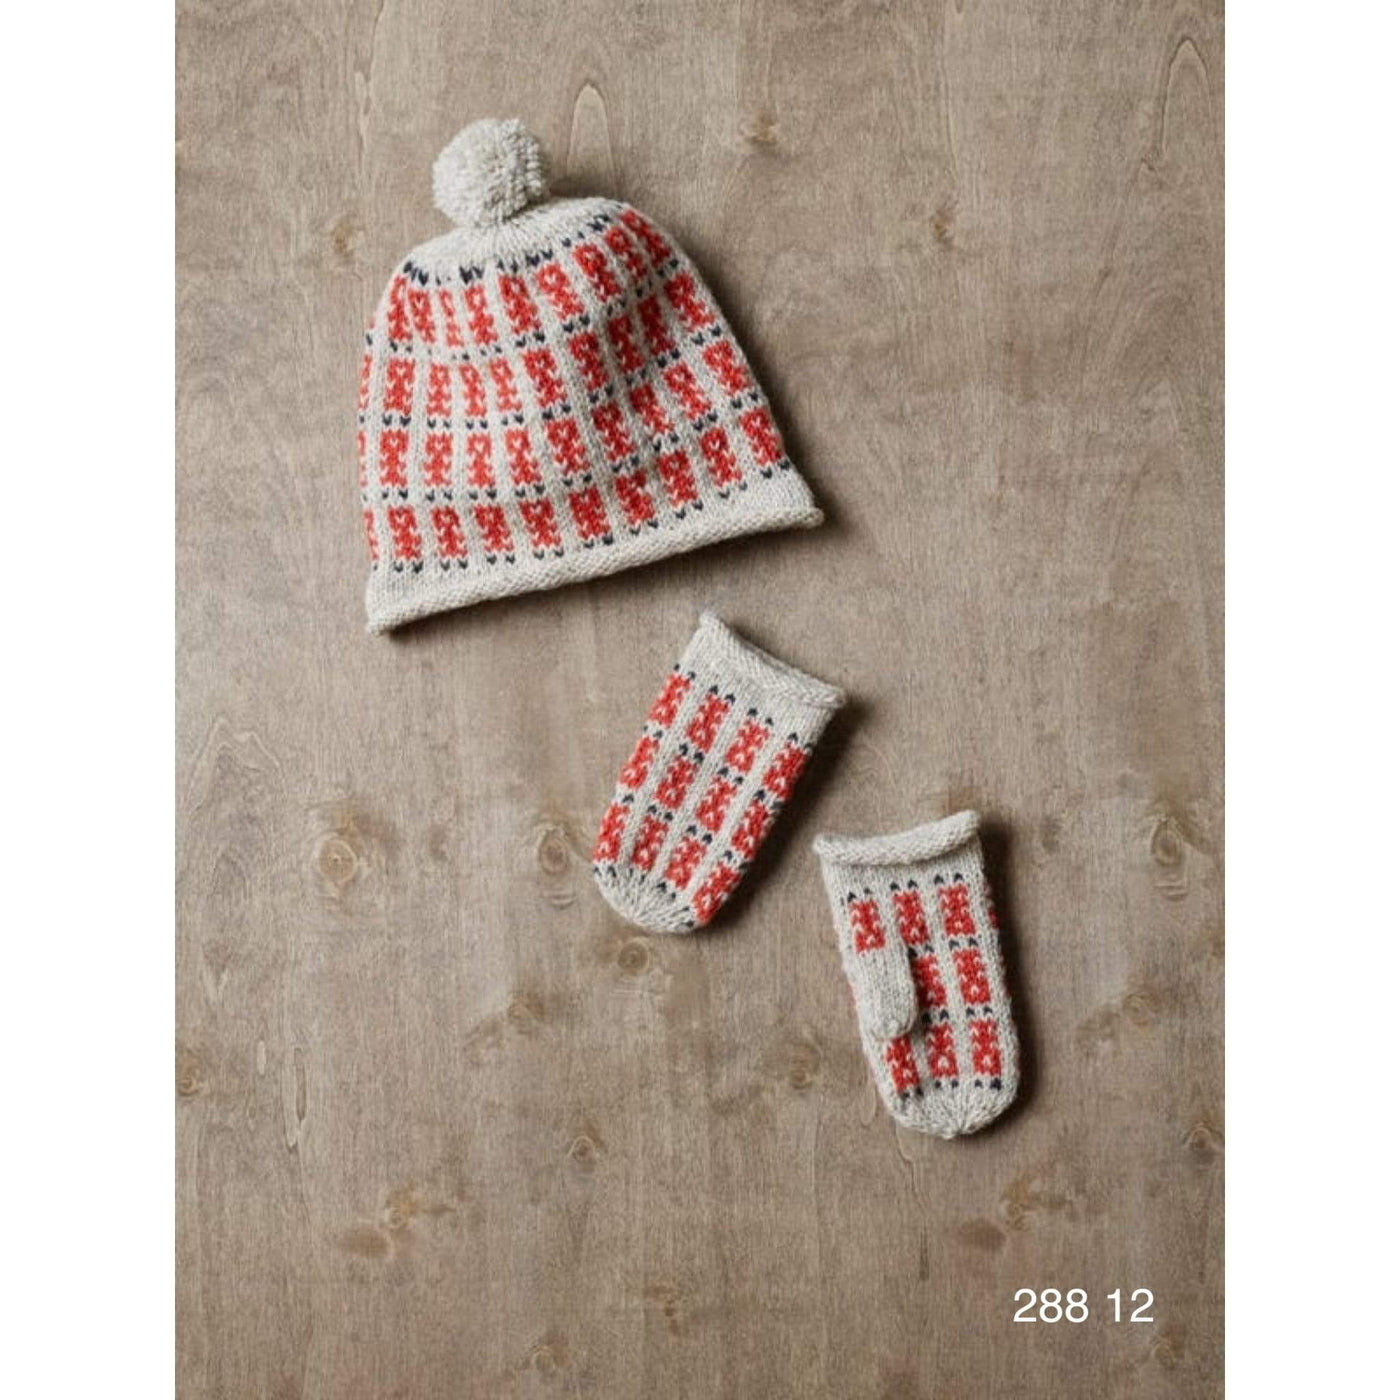 A colorwork set of children's hat and mittens knit in Strikkegarn using Rauma pattern 288-12.